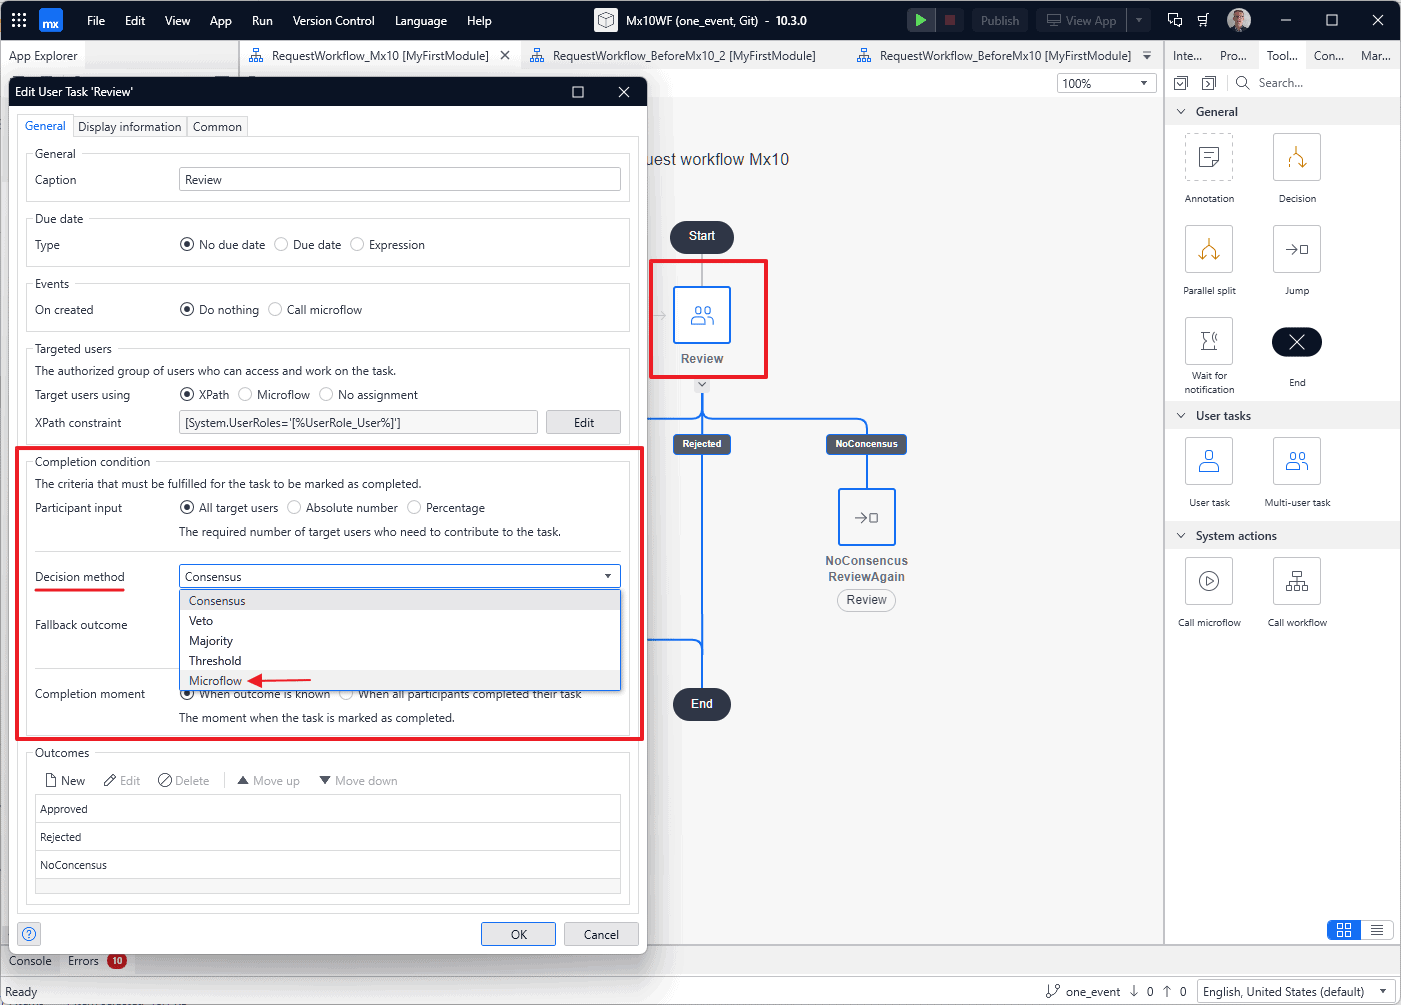 Multi User Task, Decision method microflow.